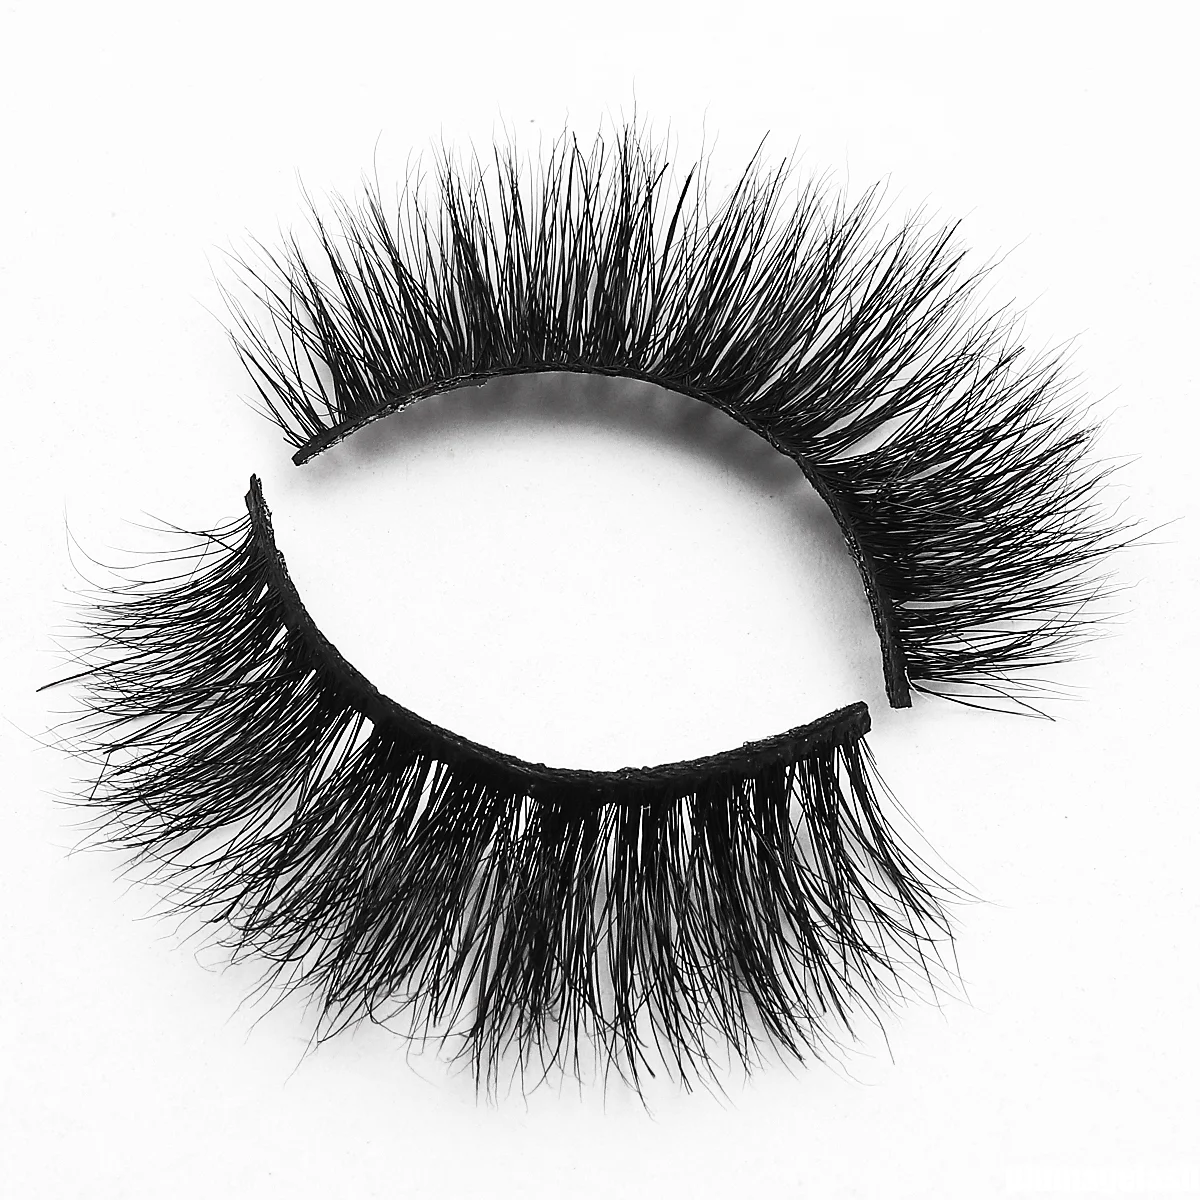 Best 3d mink eyelashes own brand custom eyelashes